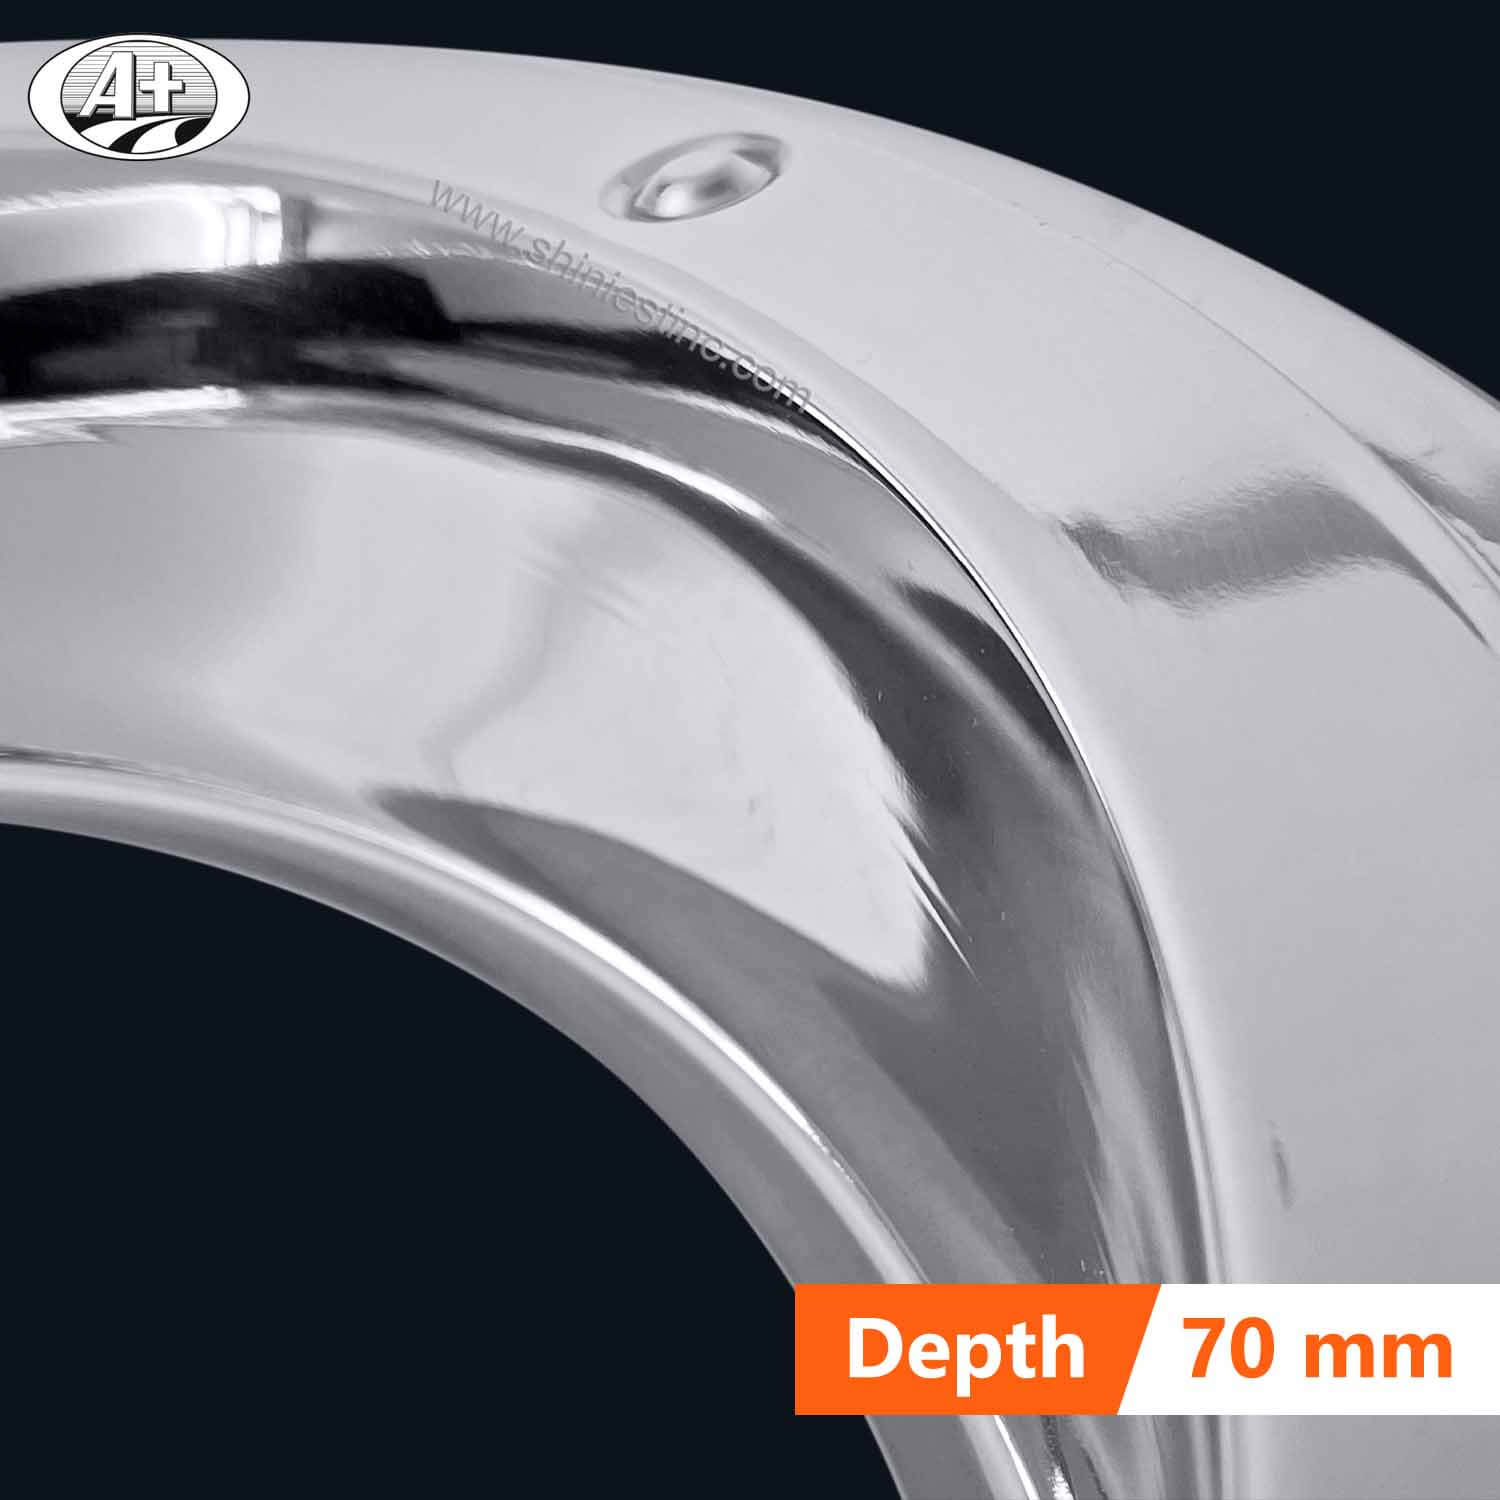 (30175R-70) 17.5＂T304 Stainless Steel Wheel Trim Ring for Rear Wheel (70mm Depth)